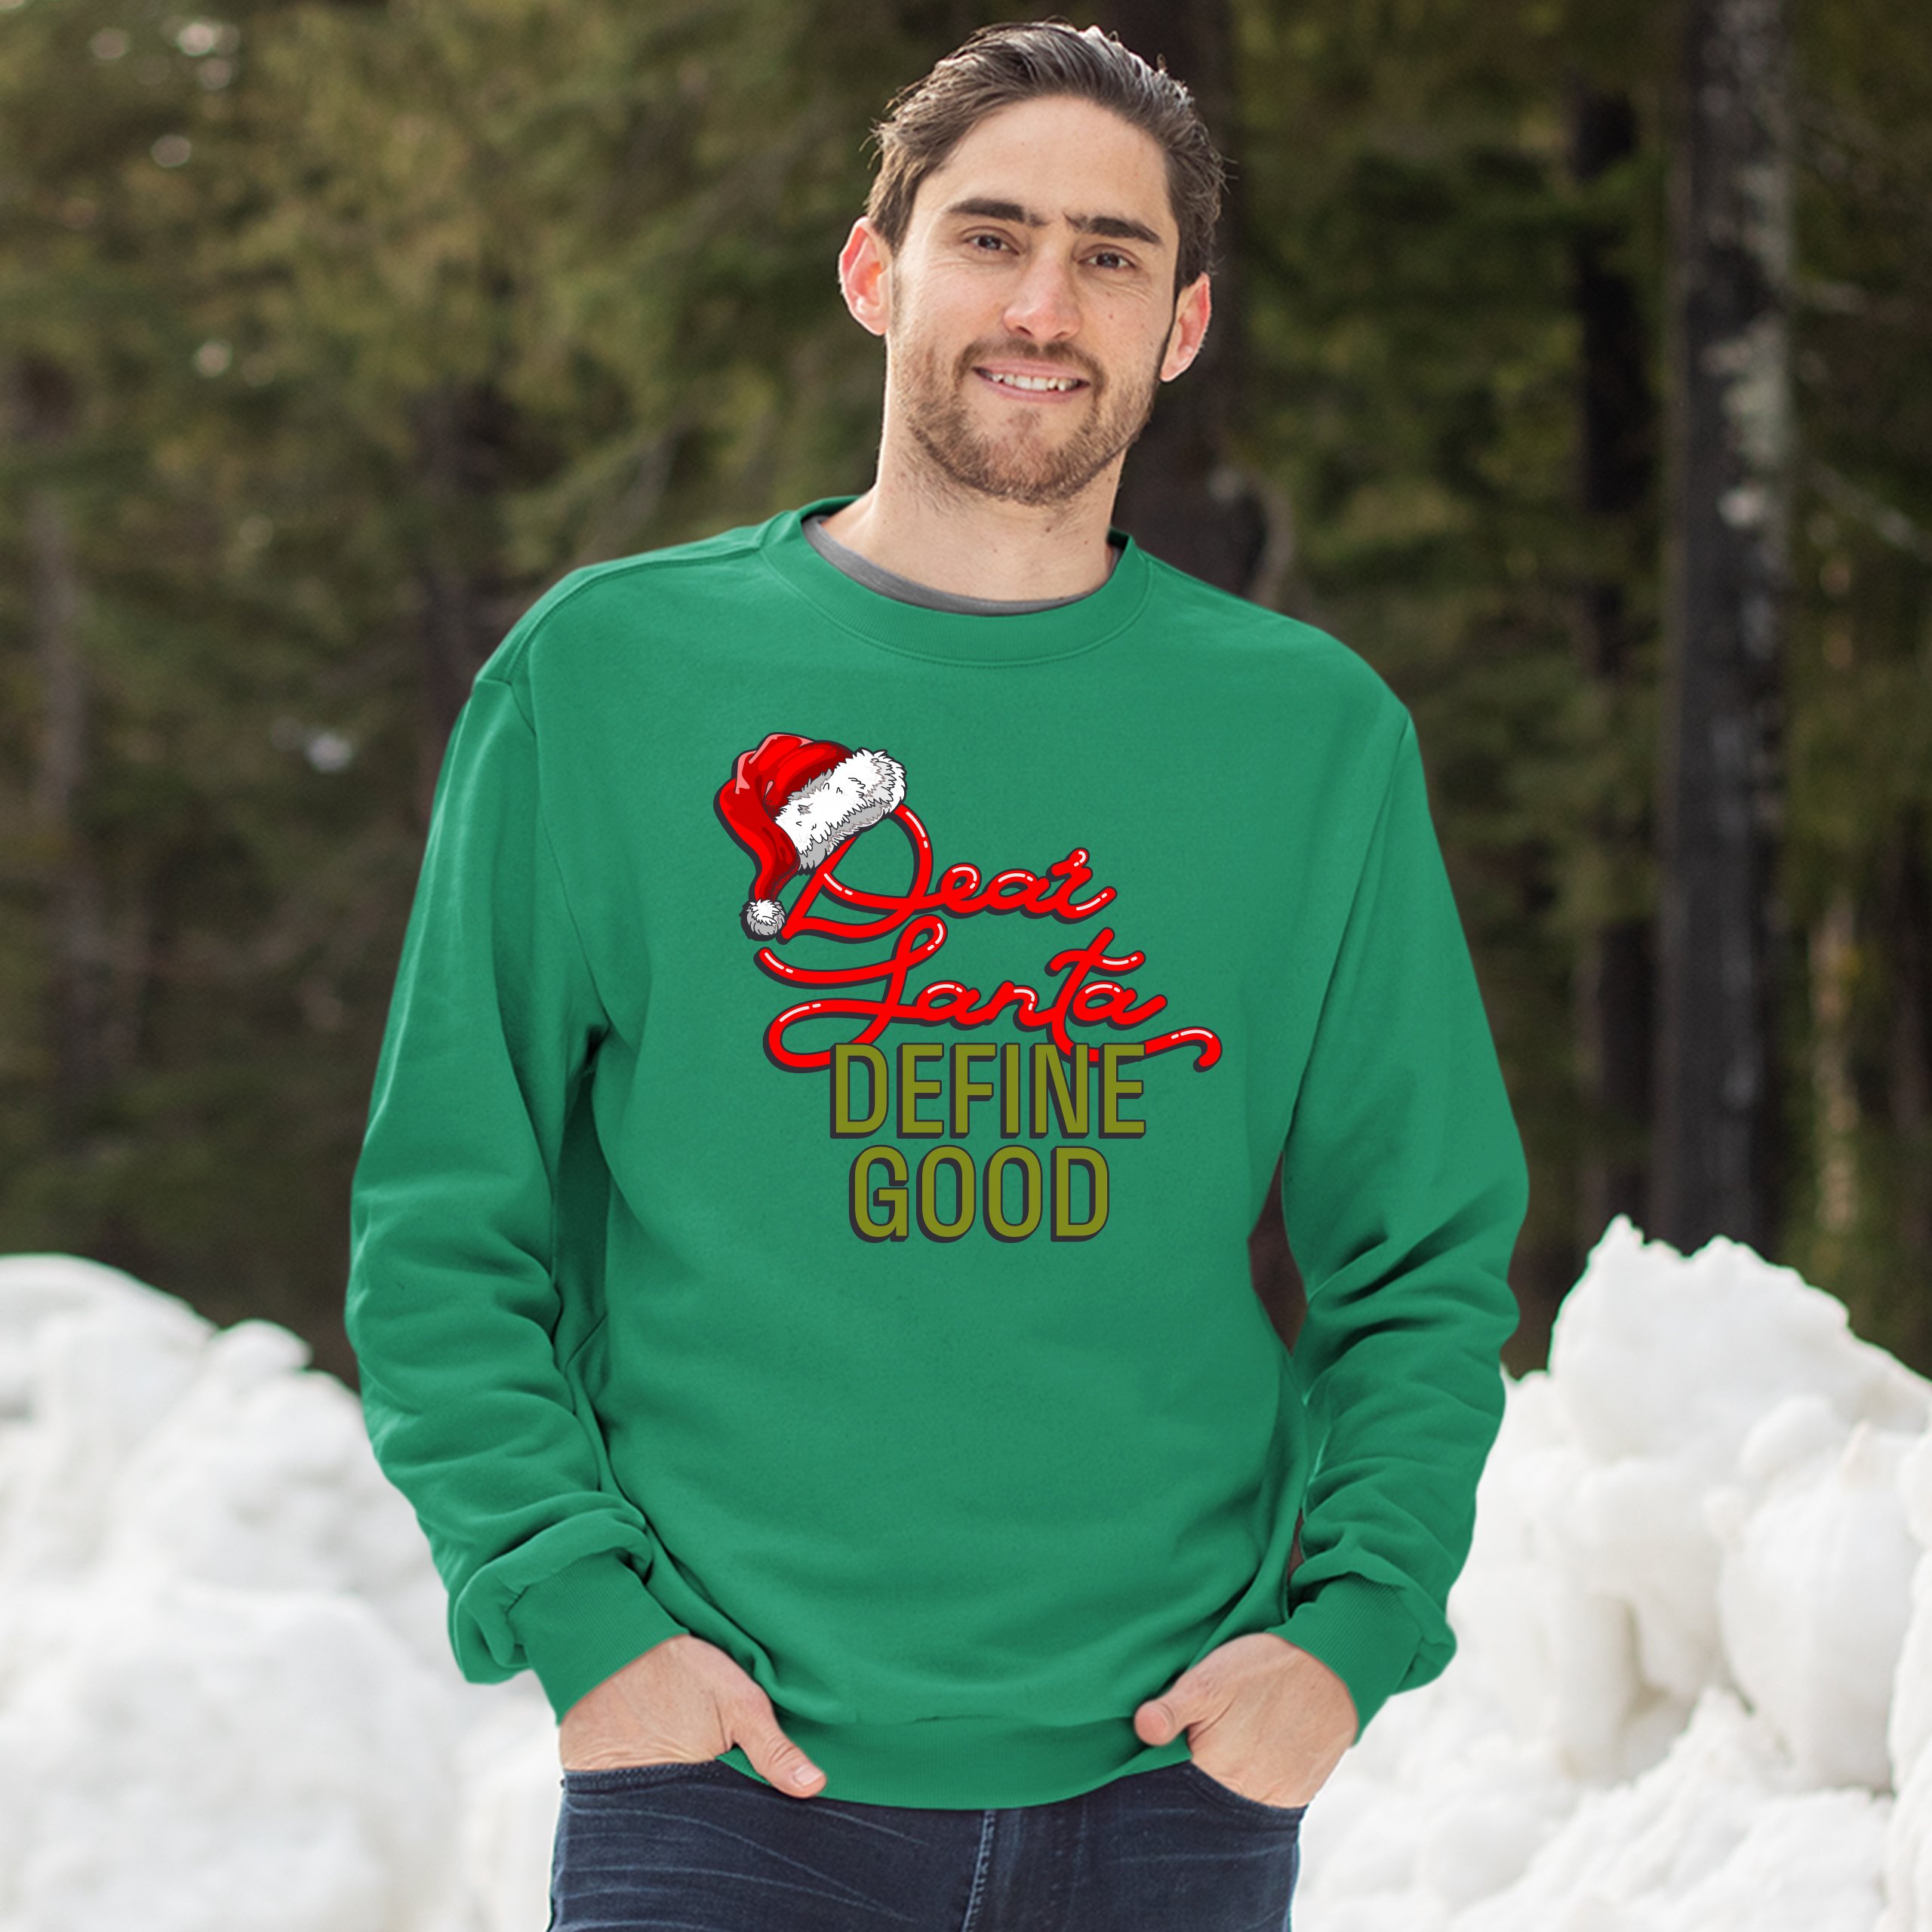 Define Naughty Sweater Top Jumper Sweatshirt Christmas Festive Xmas Dear Santa